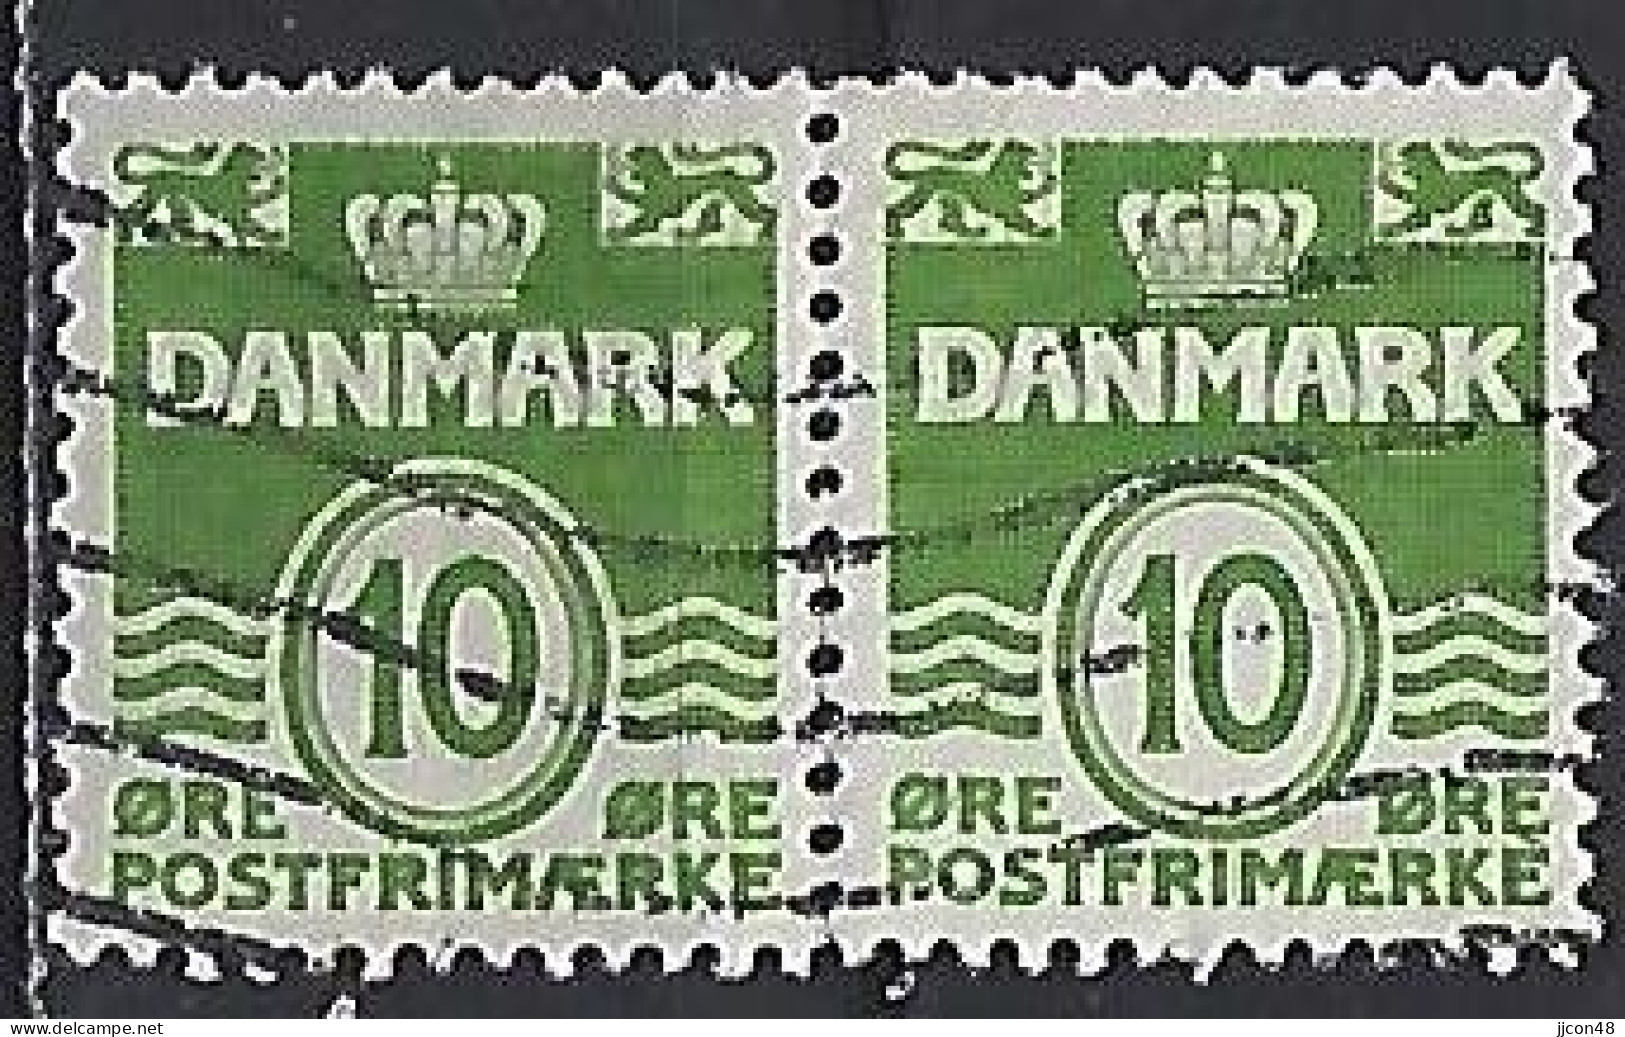 Denmark 1950-62  Wavy Lines (o) Mi.328 Y - Oblitérés